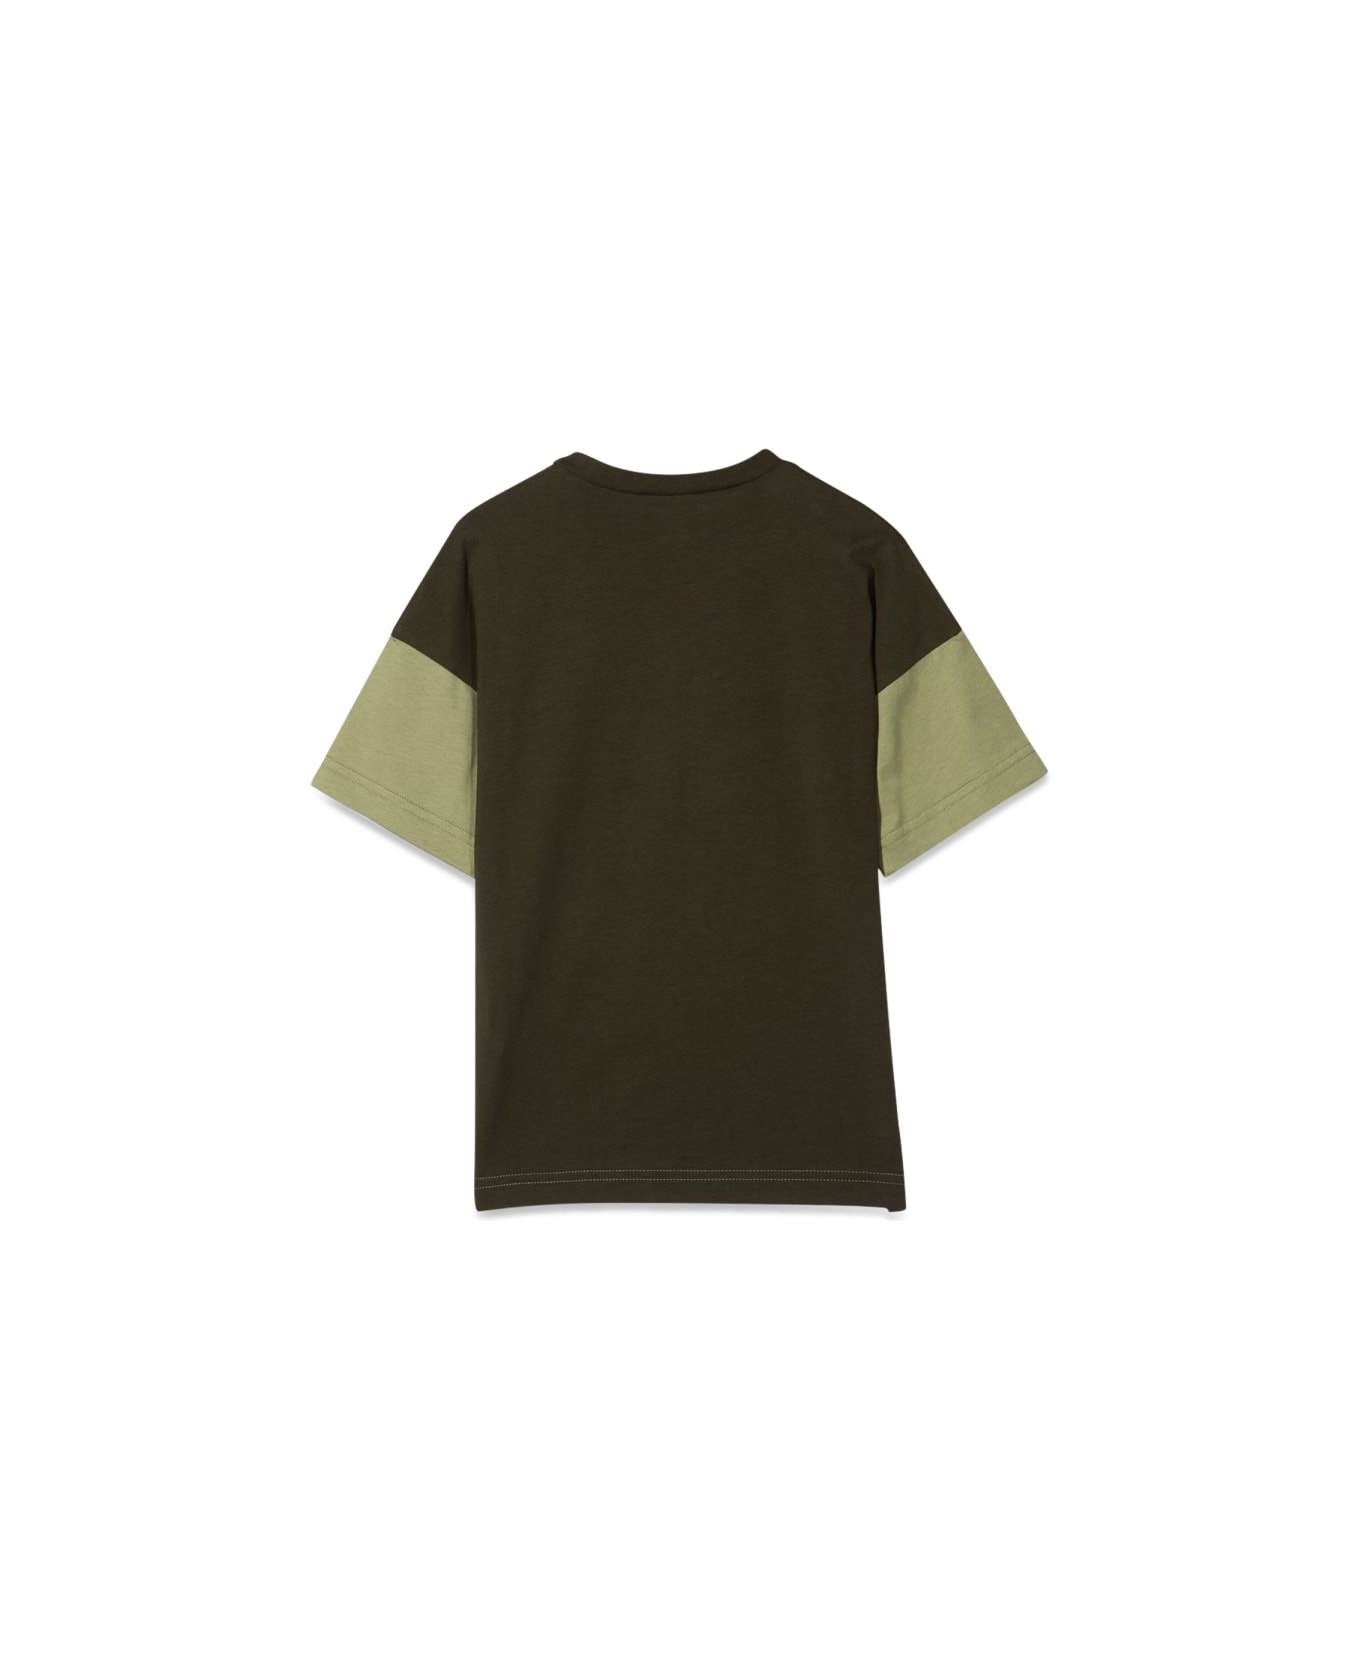 N.21 Shirt - GREEN